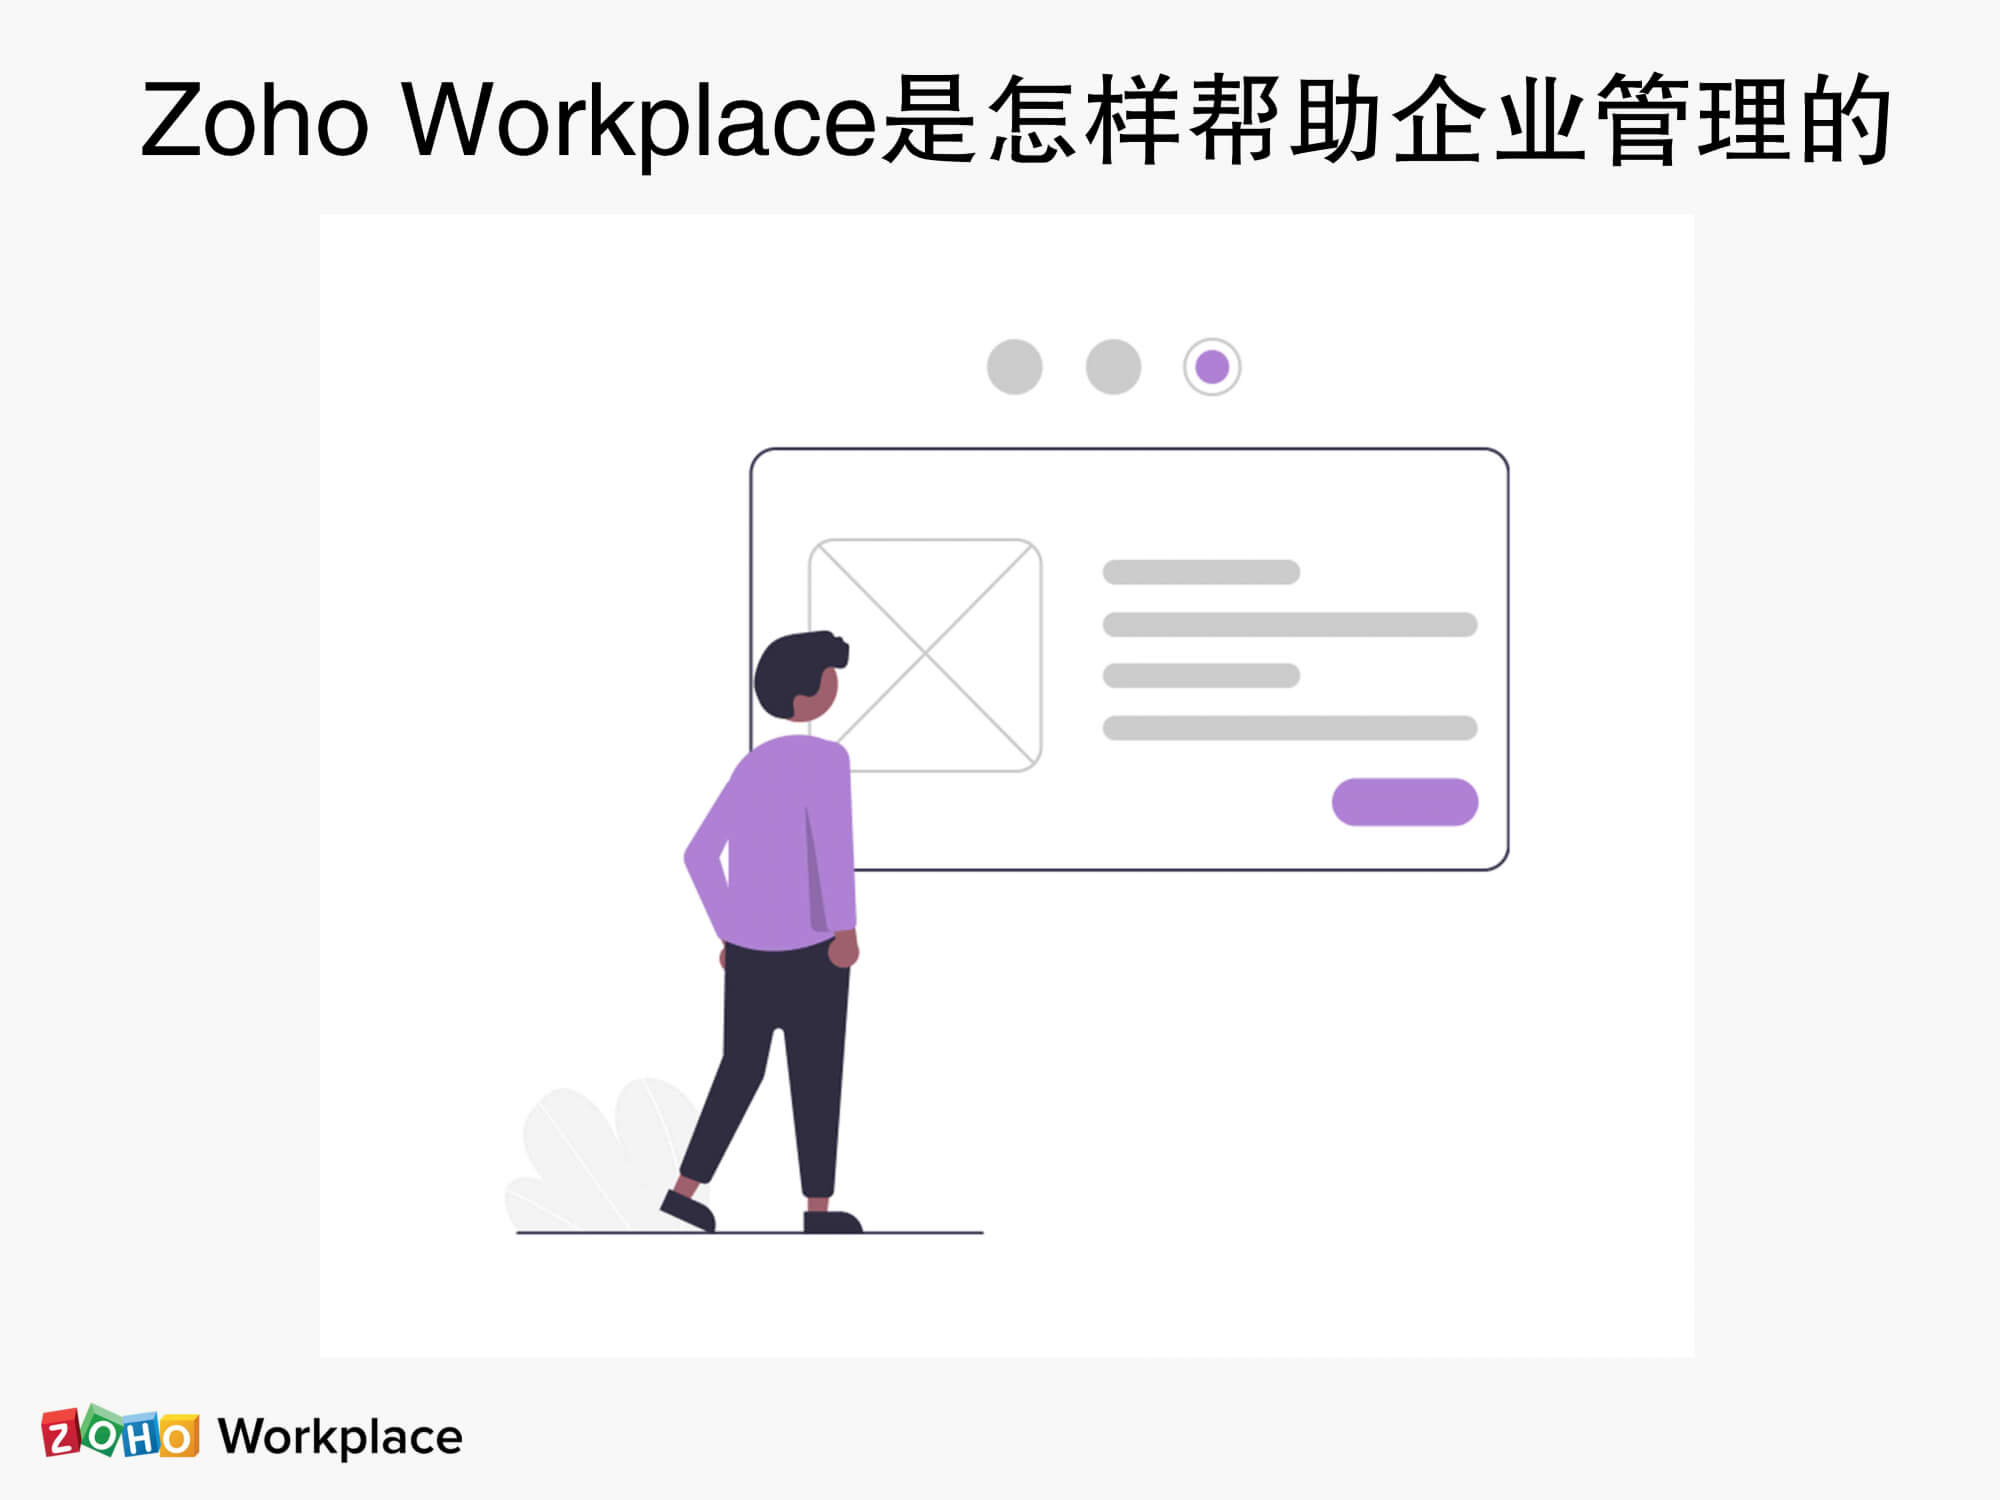 Zoho Workplace是怎样帮助企业管理的